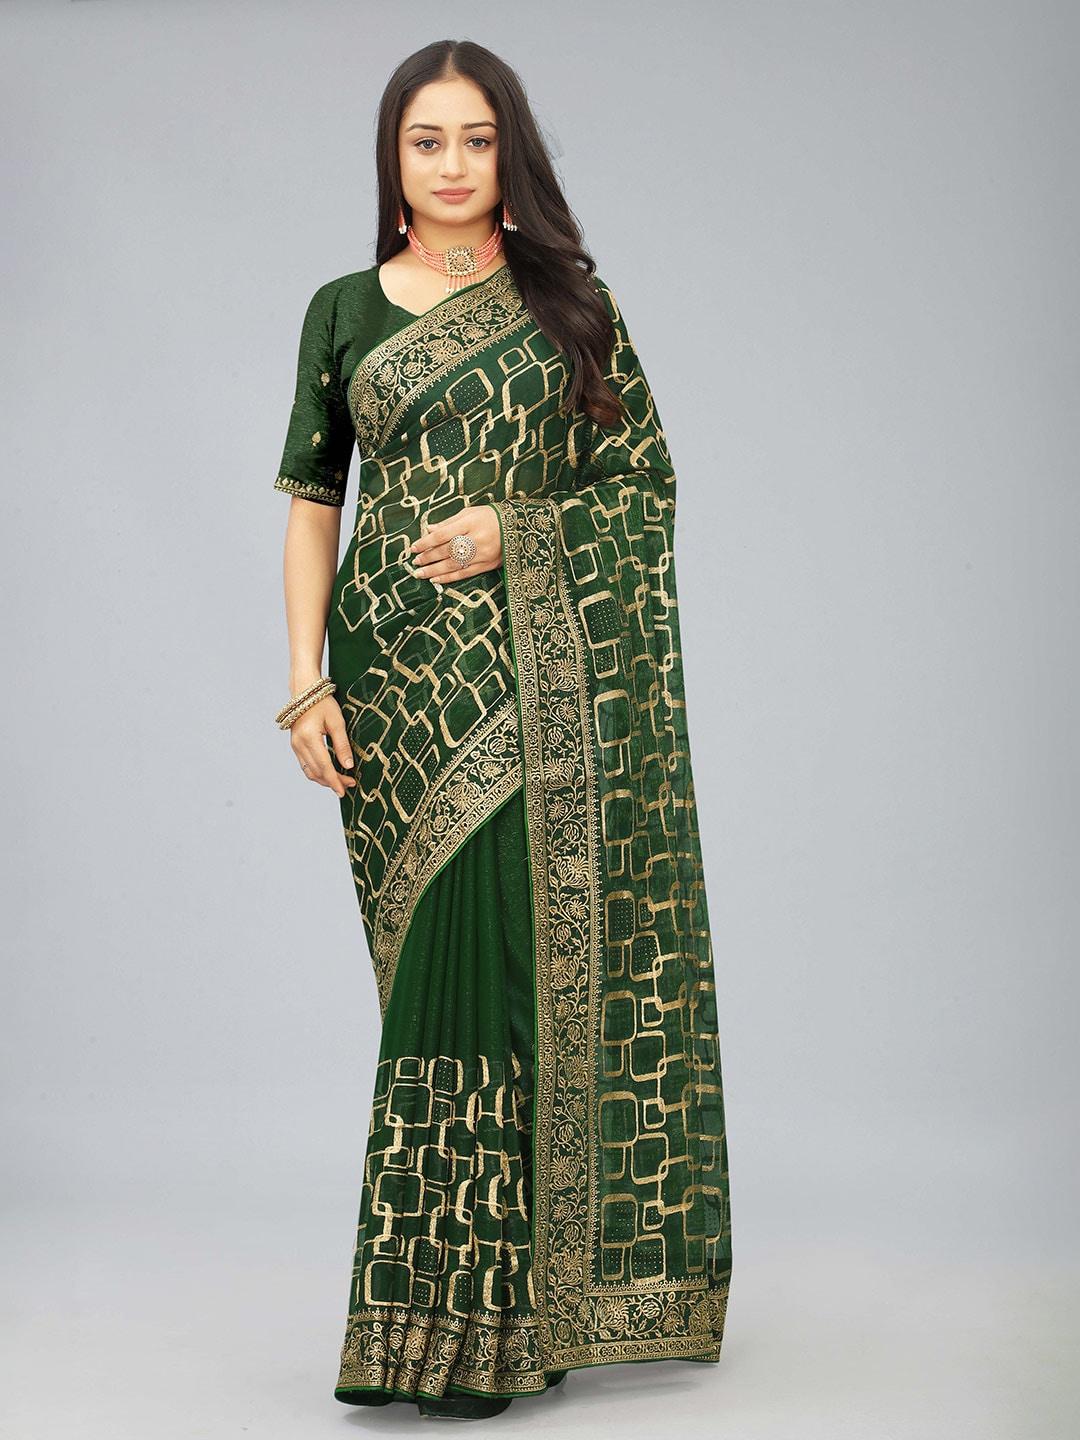 hinaya geometric embellished embroidered beads and stones saree